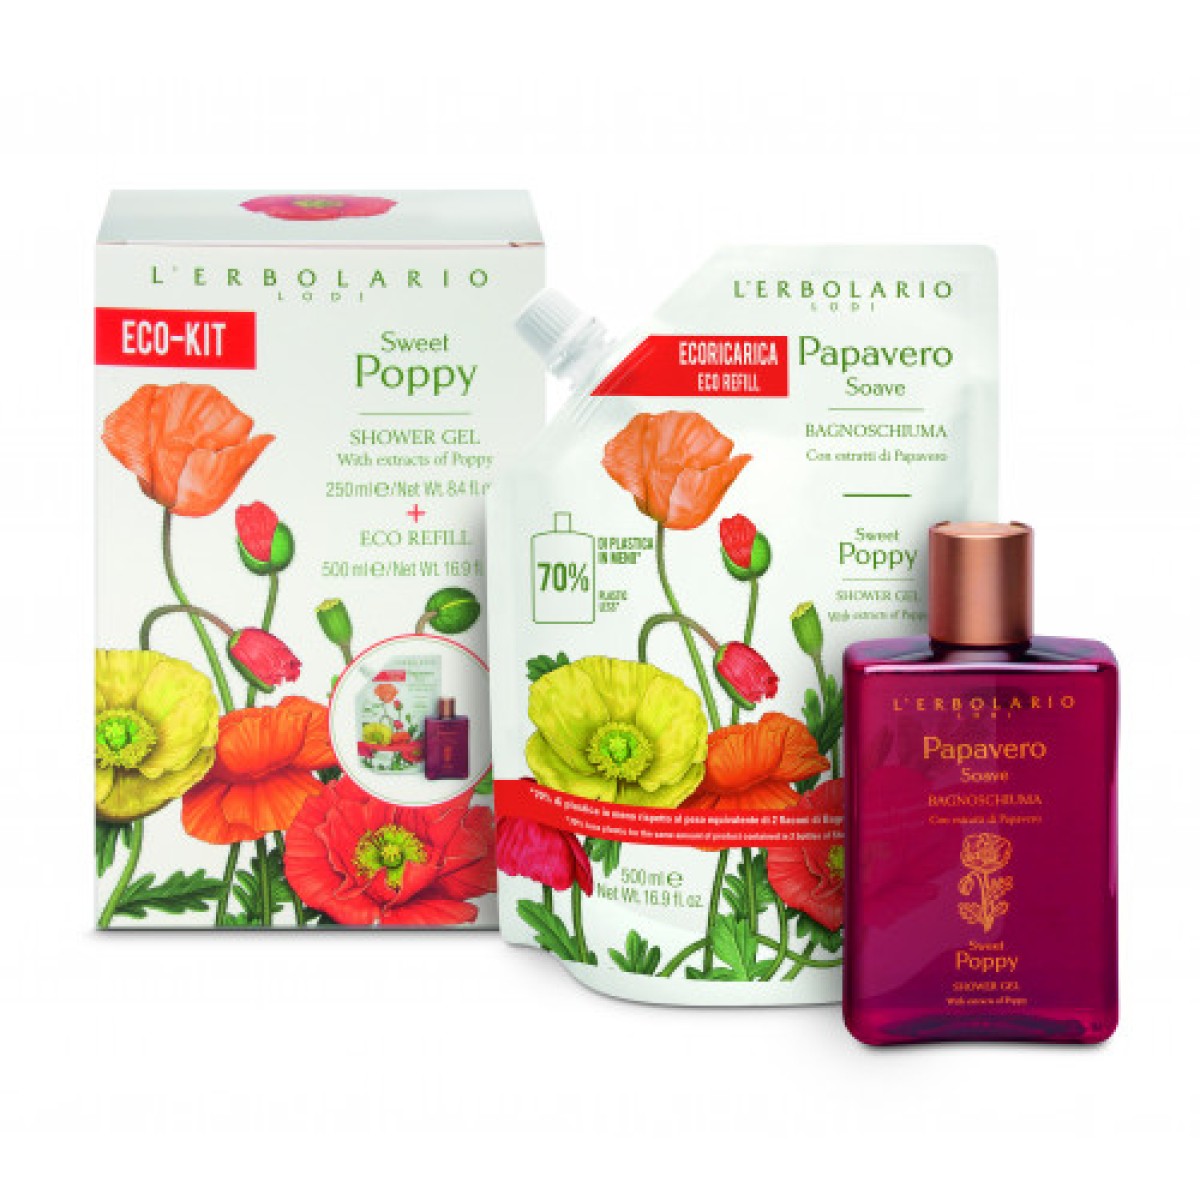 L \' Erbolario | Sweet Poppy Shower Gel  Eco-Kit Αρωματικό Αφρόλουτρο 250ml & Οικολογικό Ανταλλακτικό 500ml